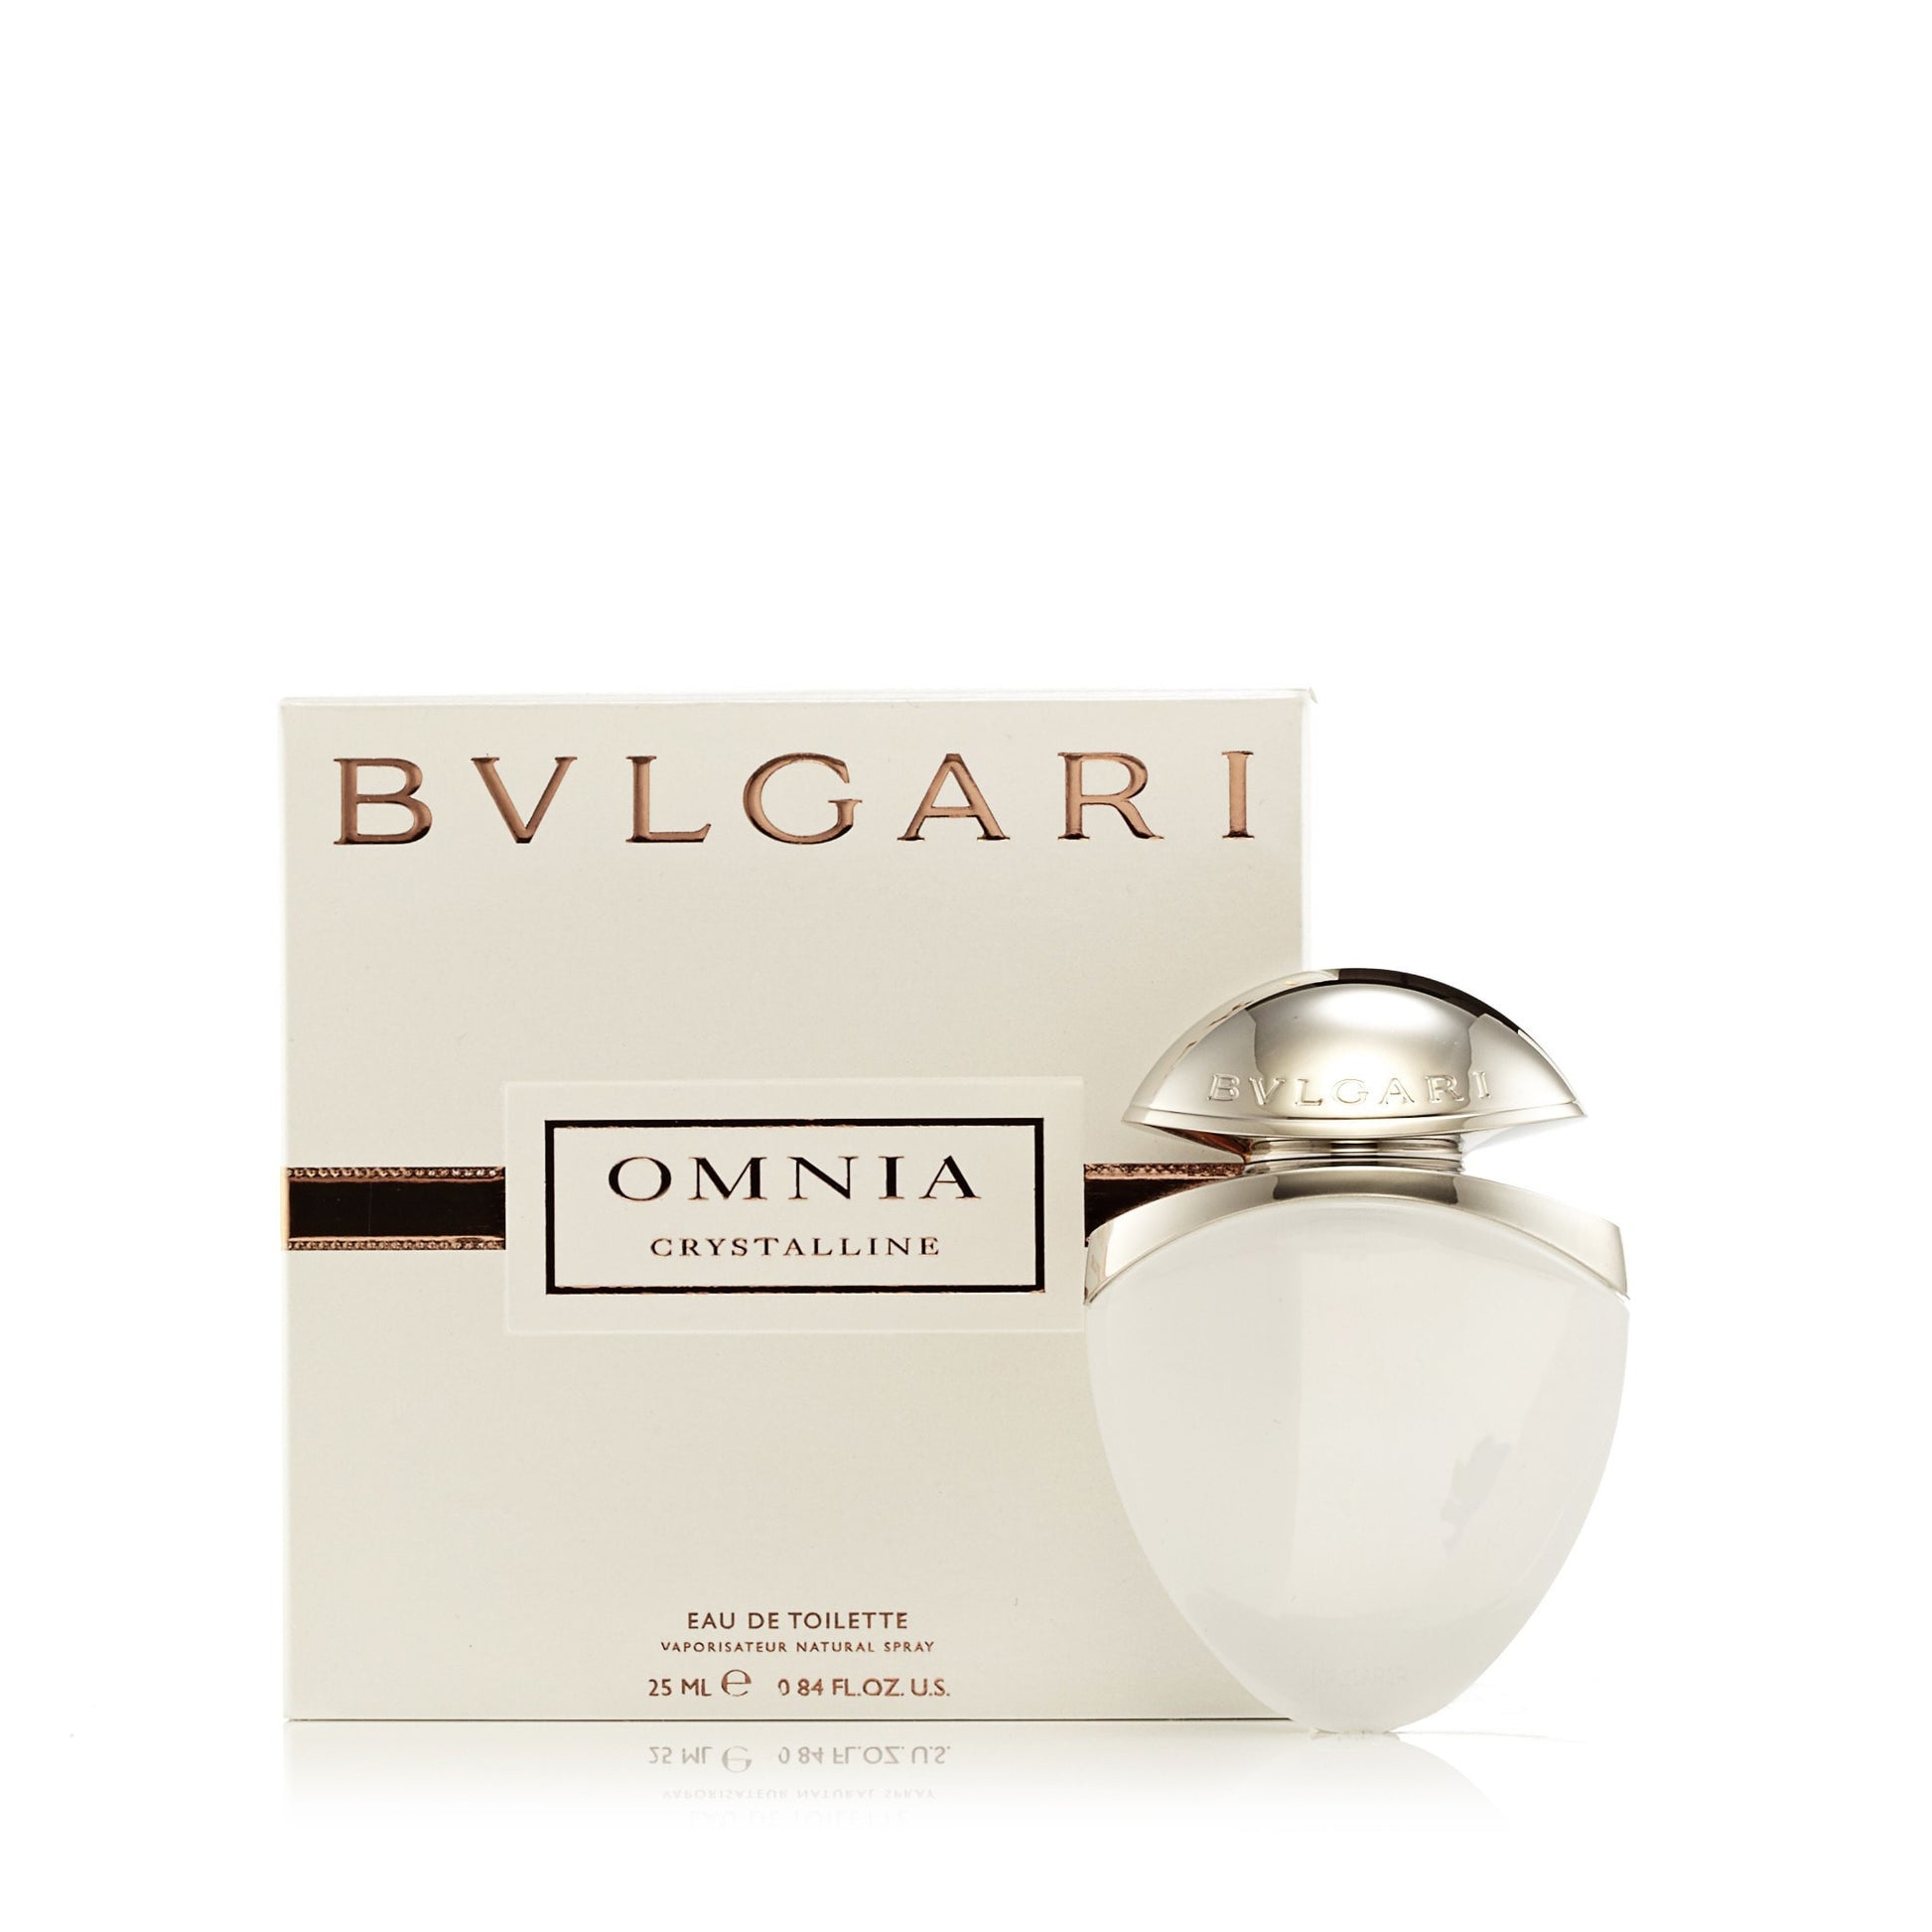 Omnia Crystalline Eau de Toilette Spray for Women by Bvlgari 0.84 oz. Click to open in modal